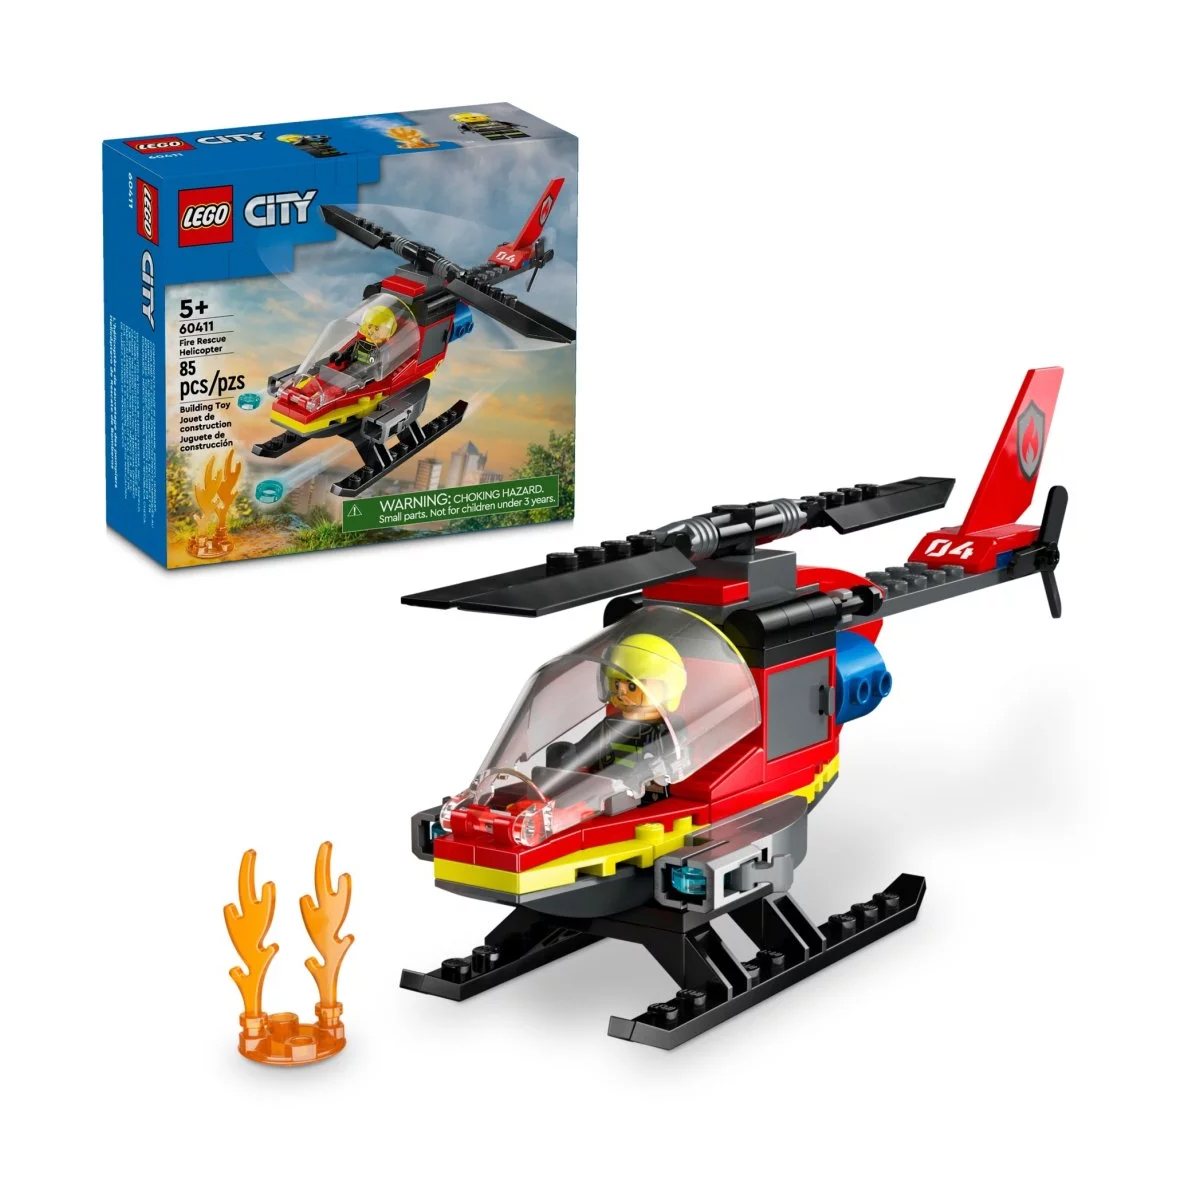 Конструктор Lego City Fire Rescue Helicopter 60411, 85 деталей конструктор lego city fire rescue helicopter 60411 85 деталей